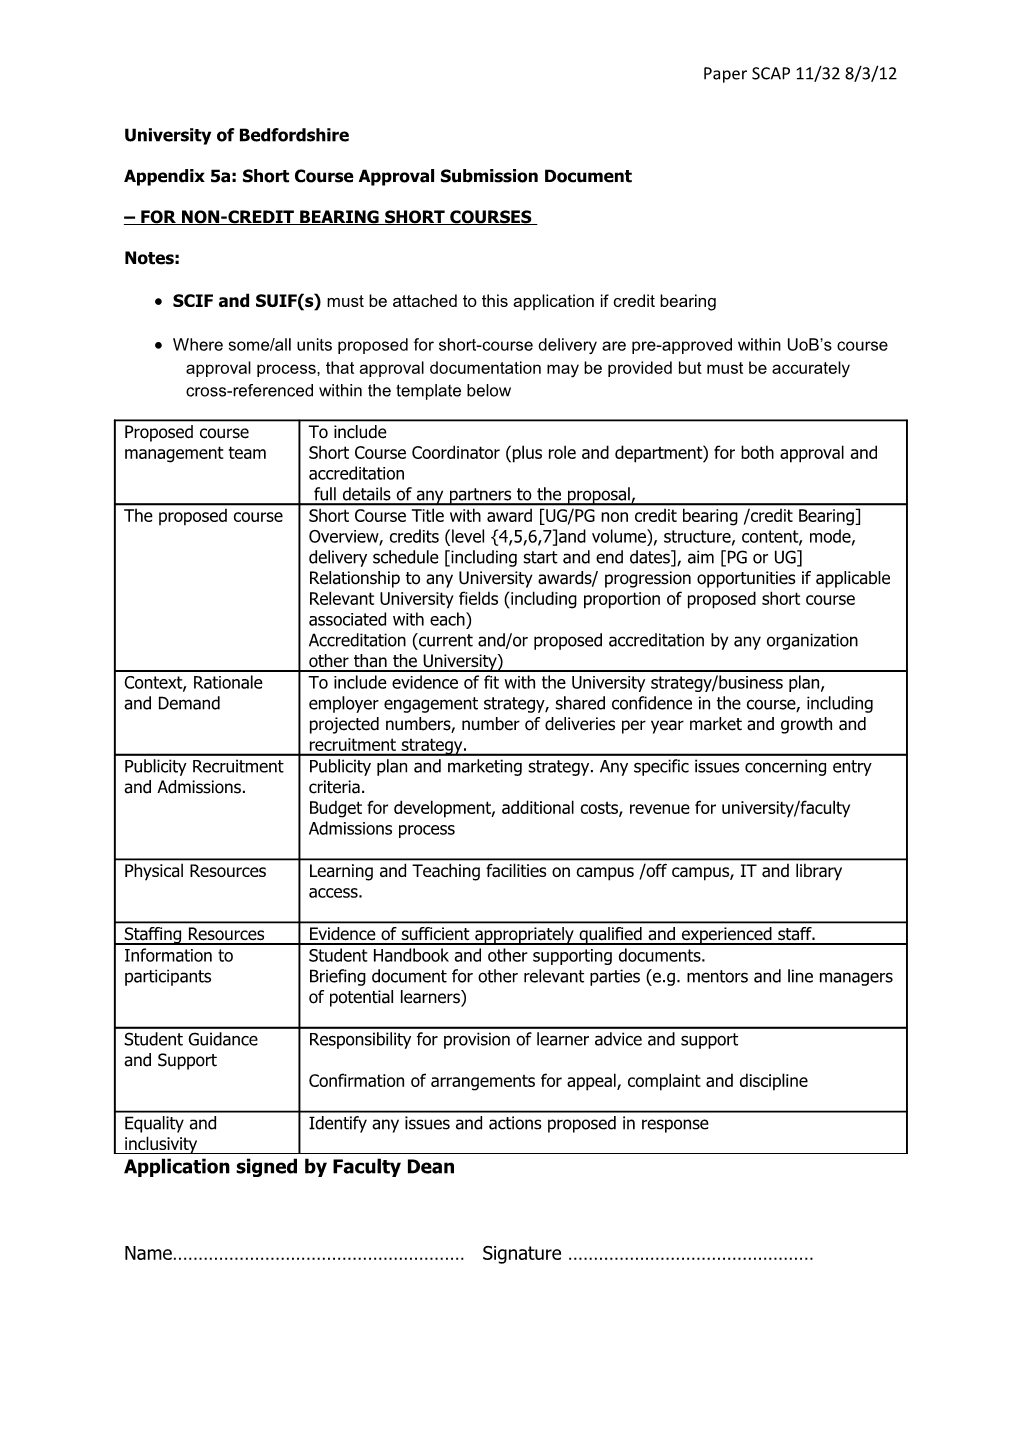 Appendix 5A: Short Course Approval Submission Document